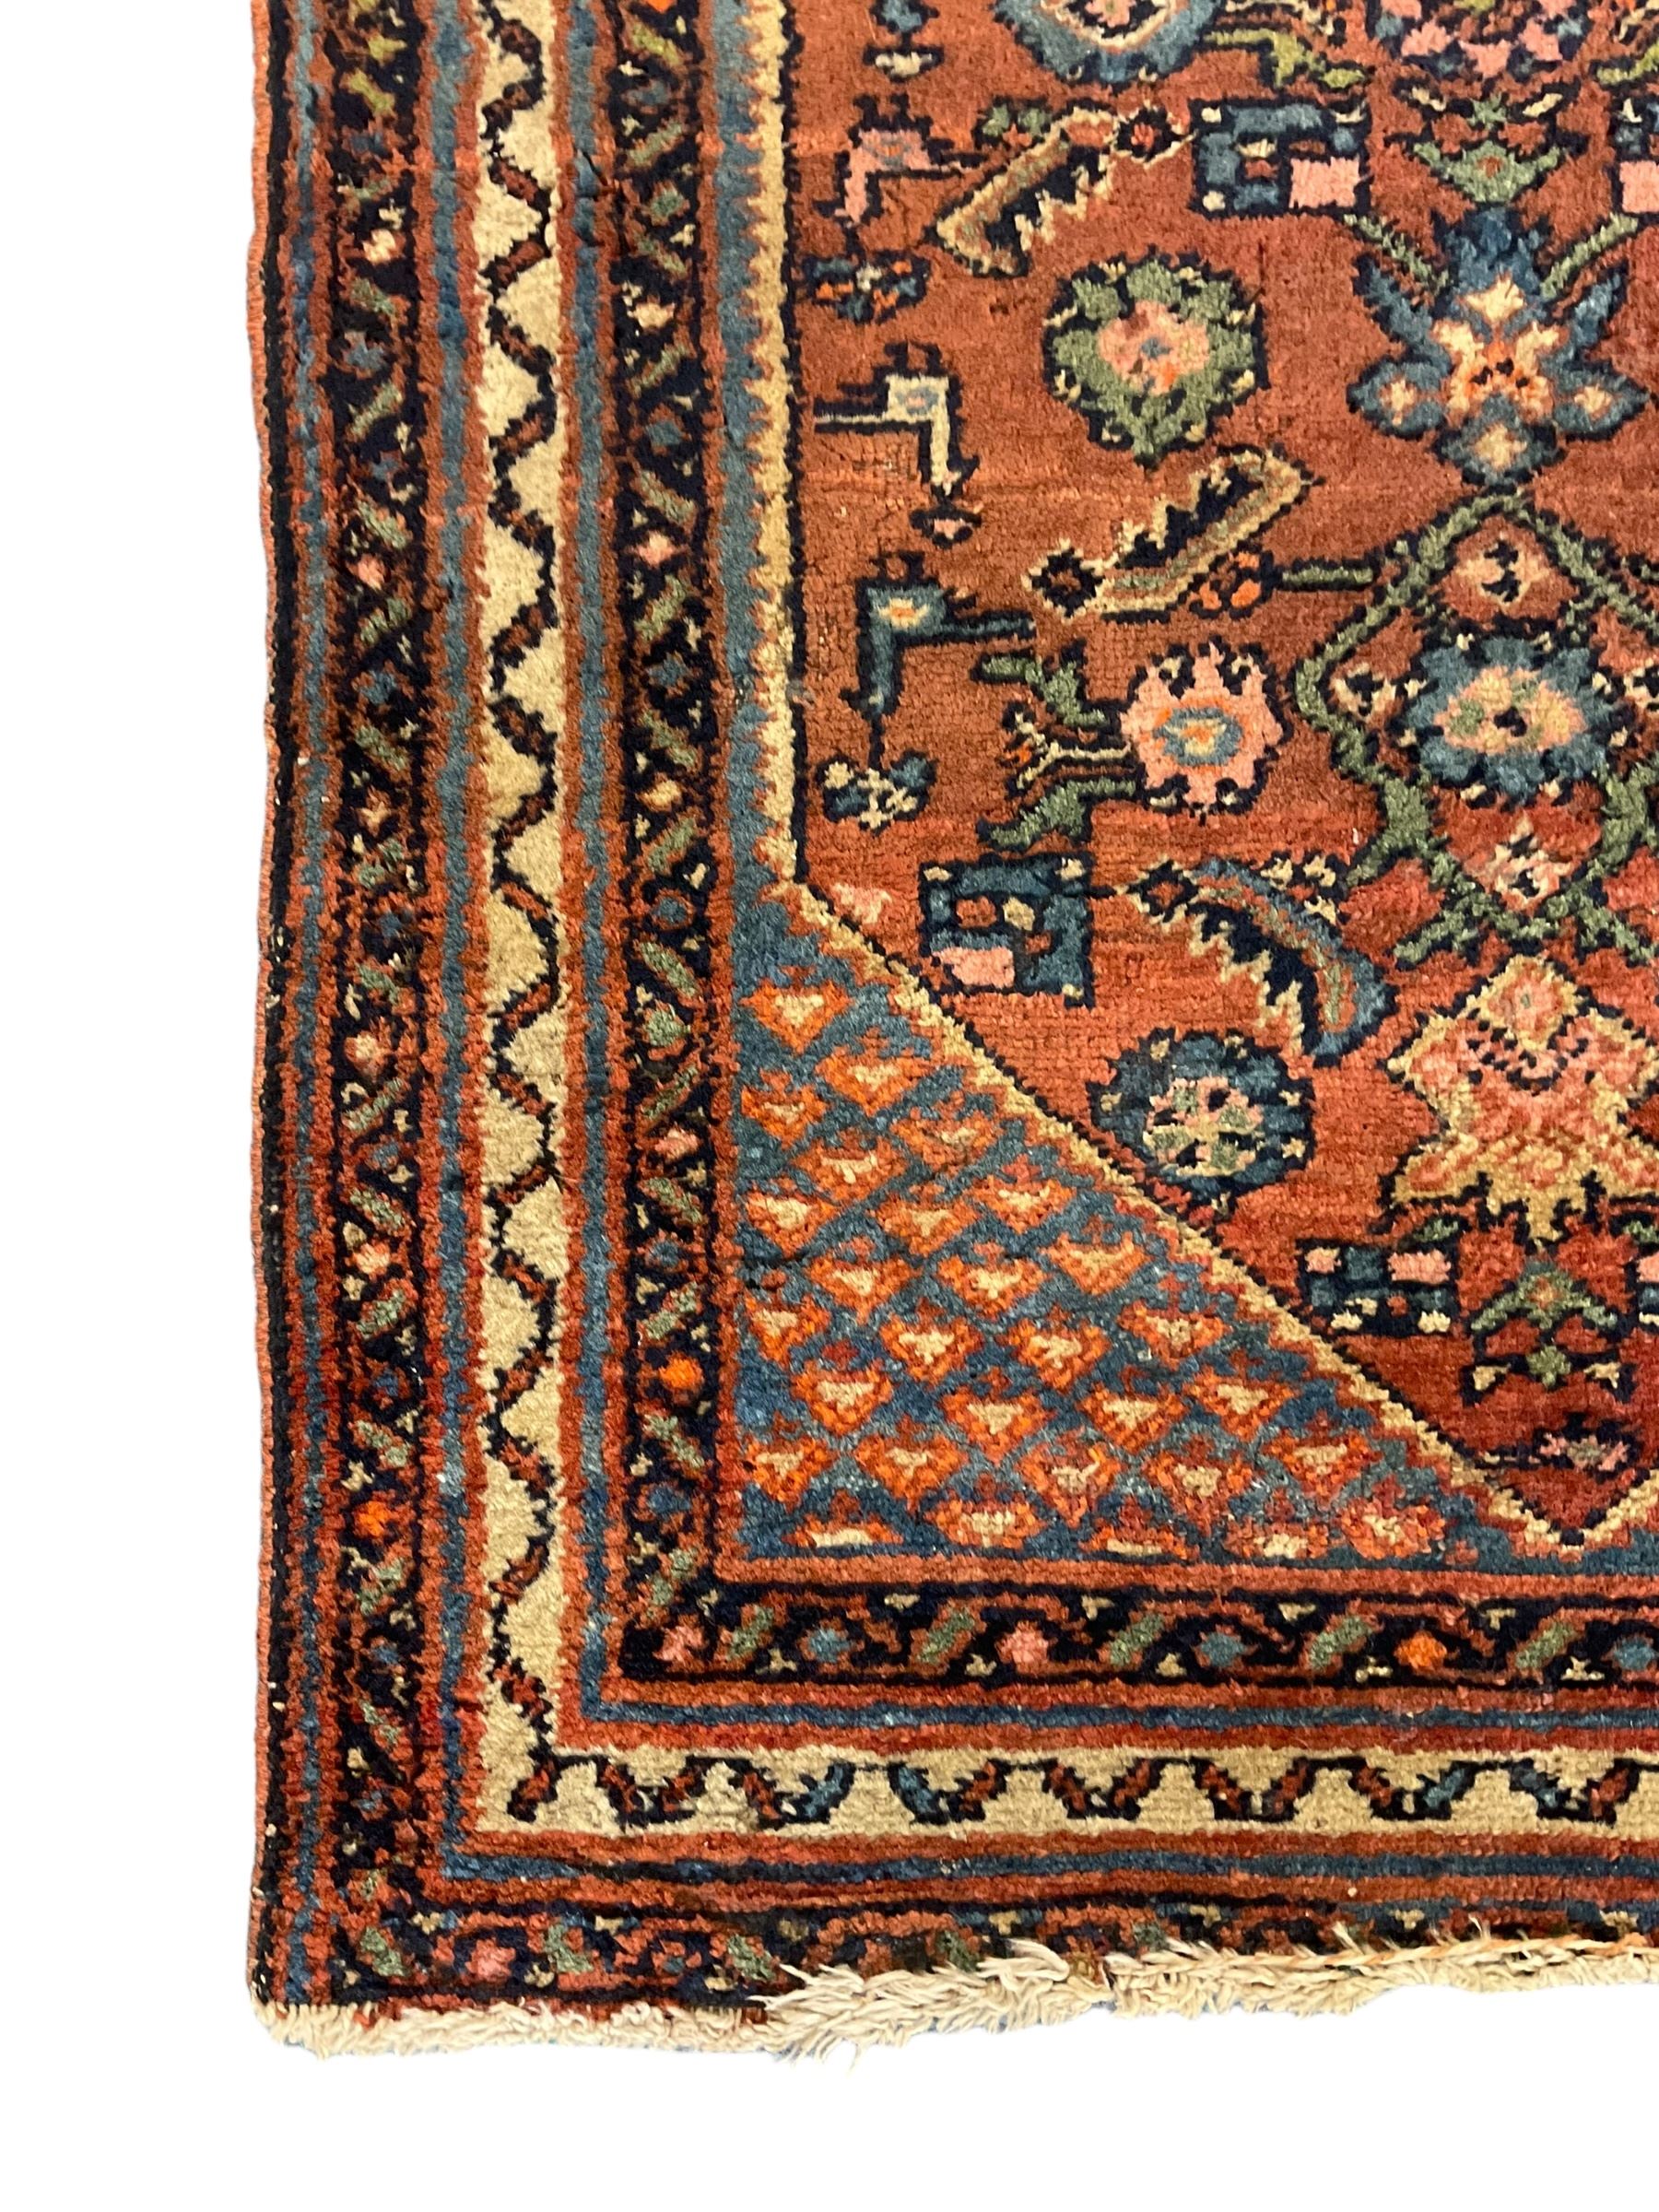 Small Persian rug or mat - Image 3 of 6